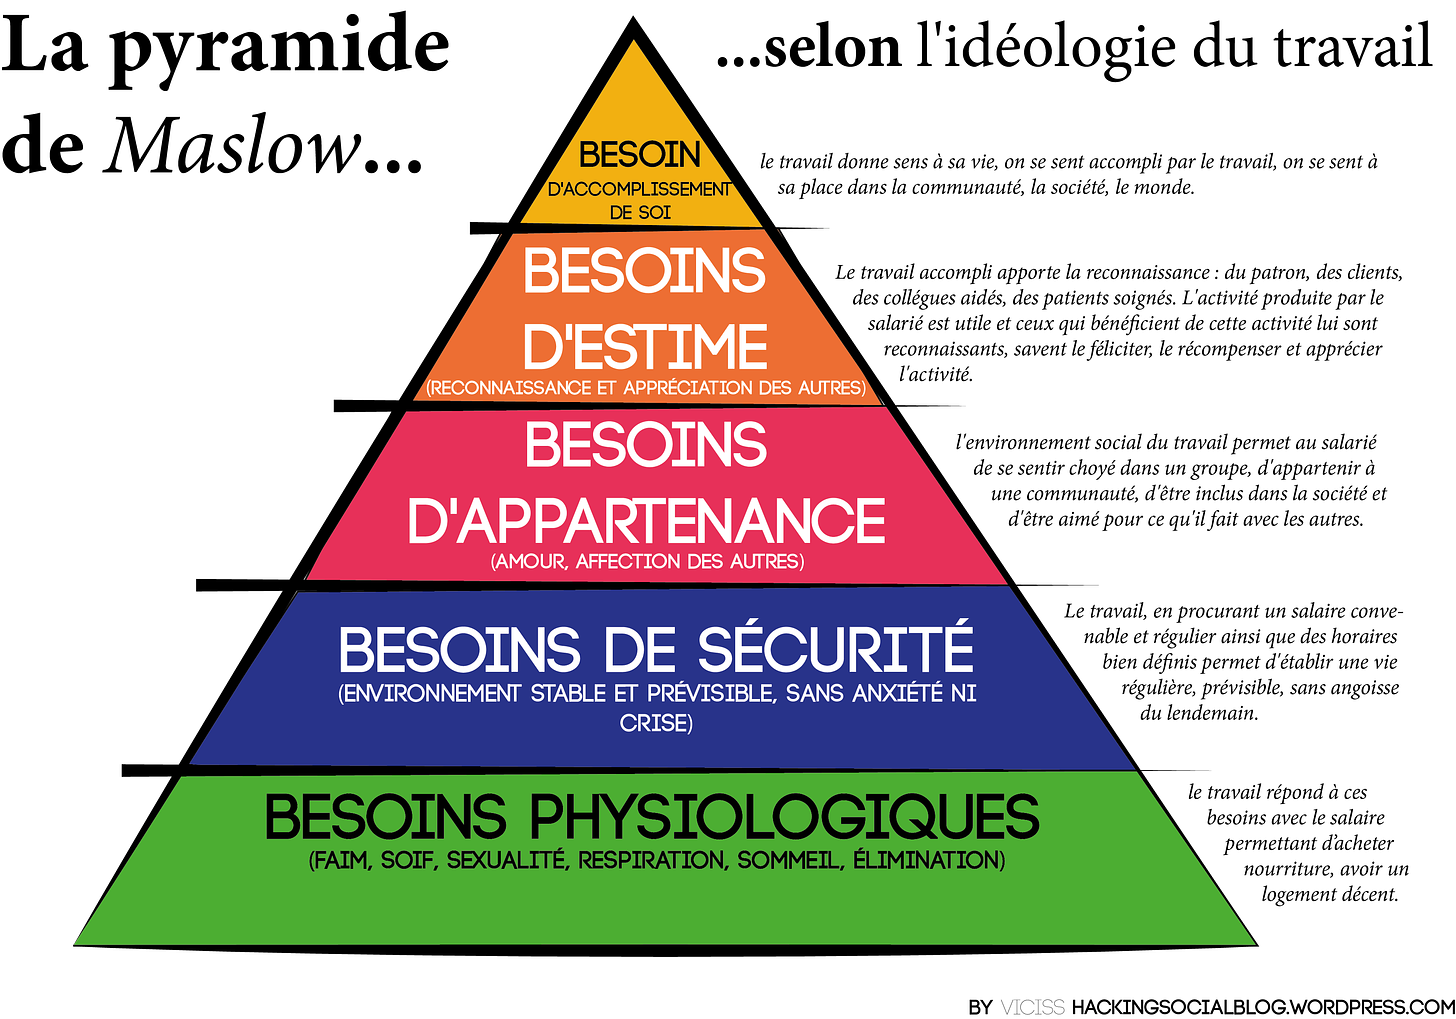 pyramide-maslow-hs-travail | Pyramide maslow, Pyramide, Besoin de maslow